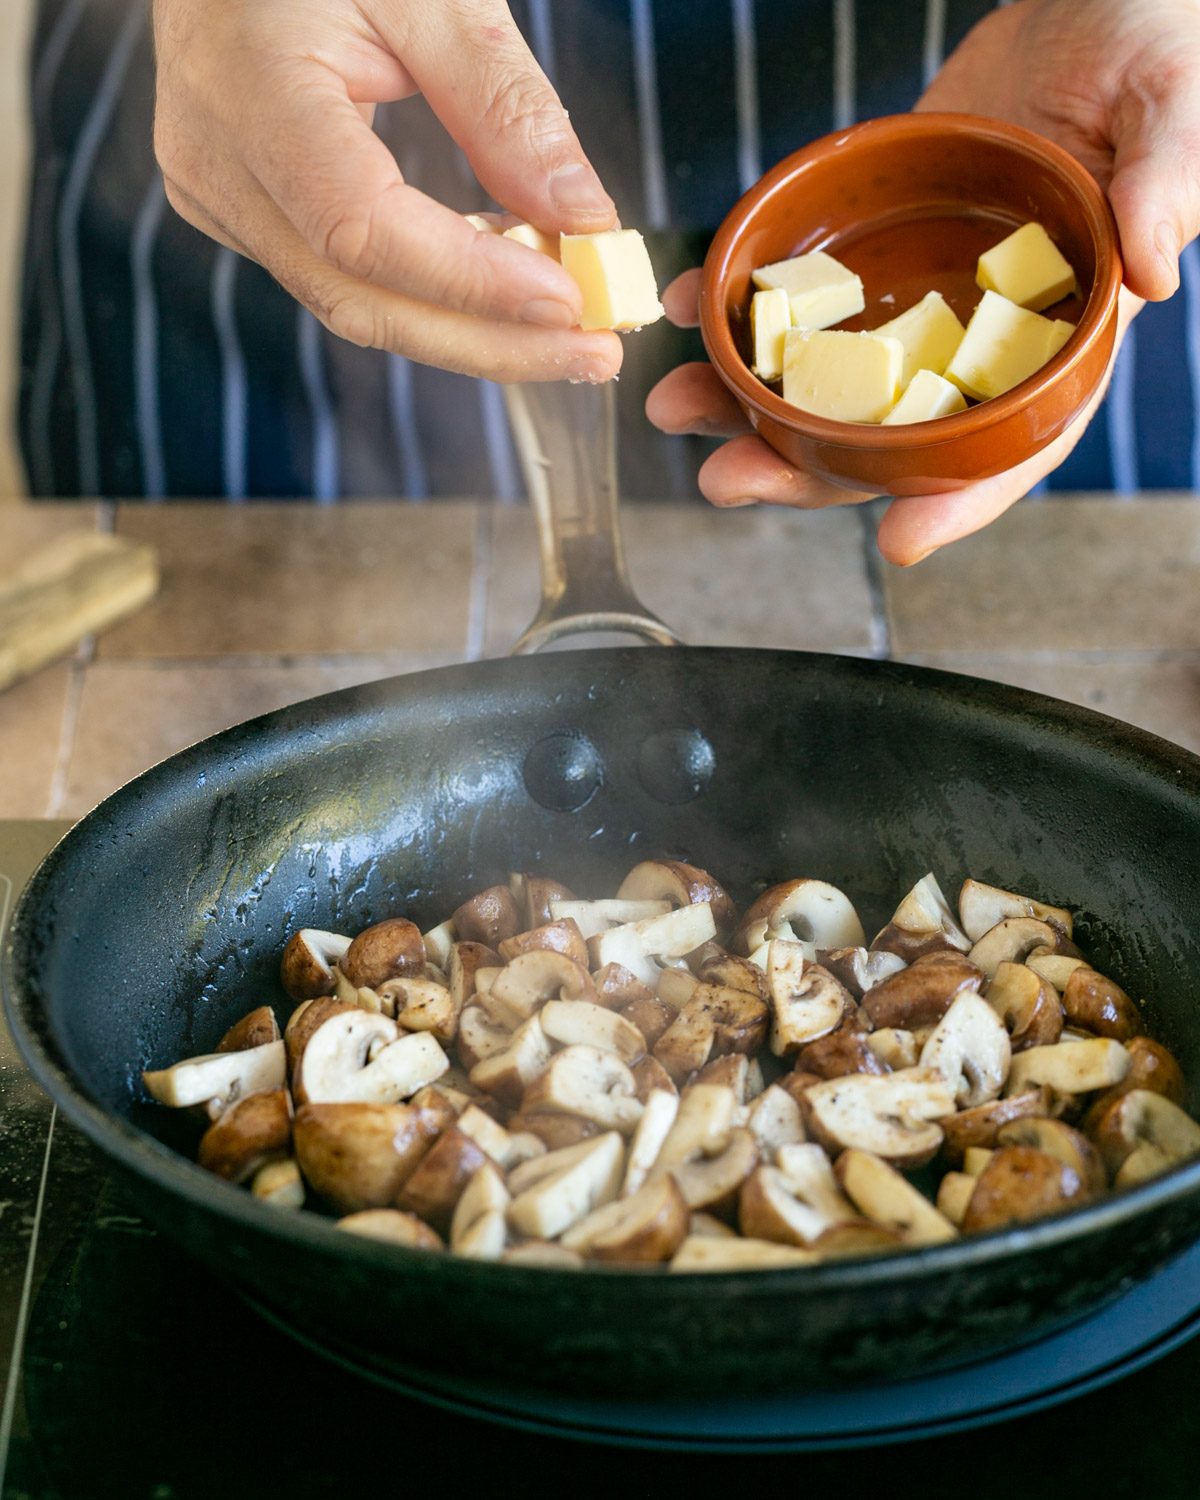 Adding butter to roast mushrooms